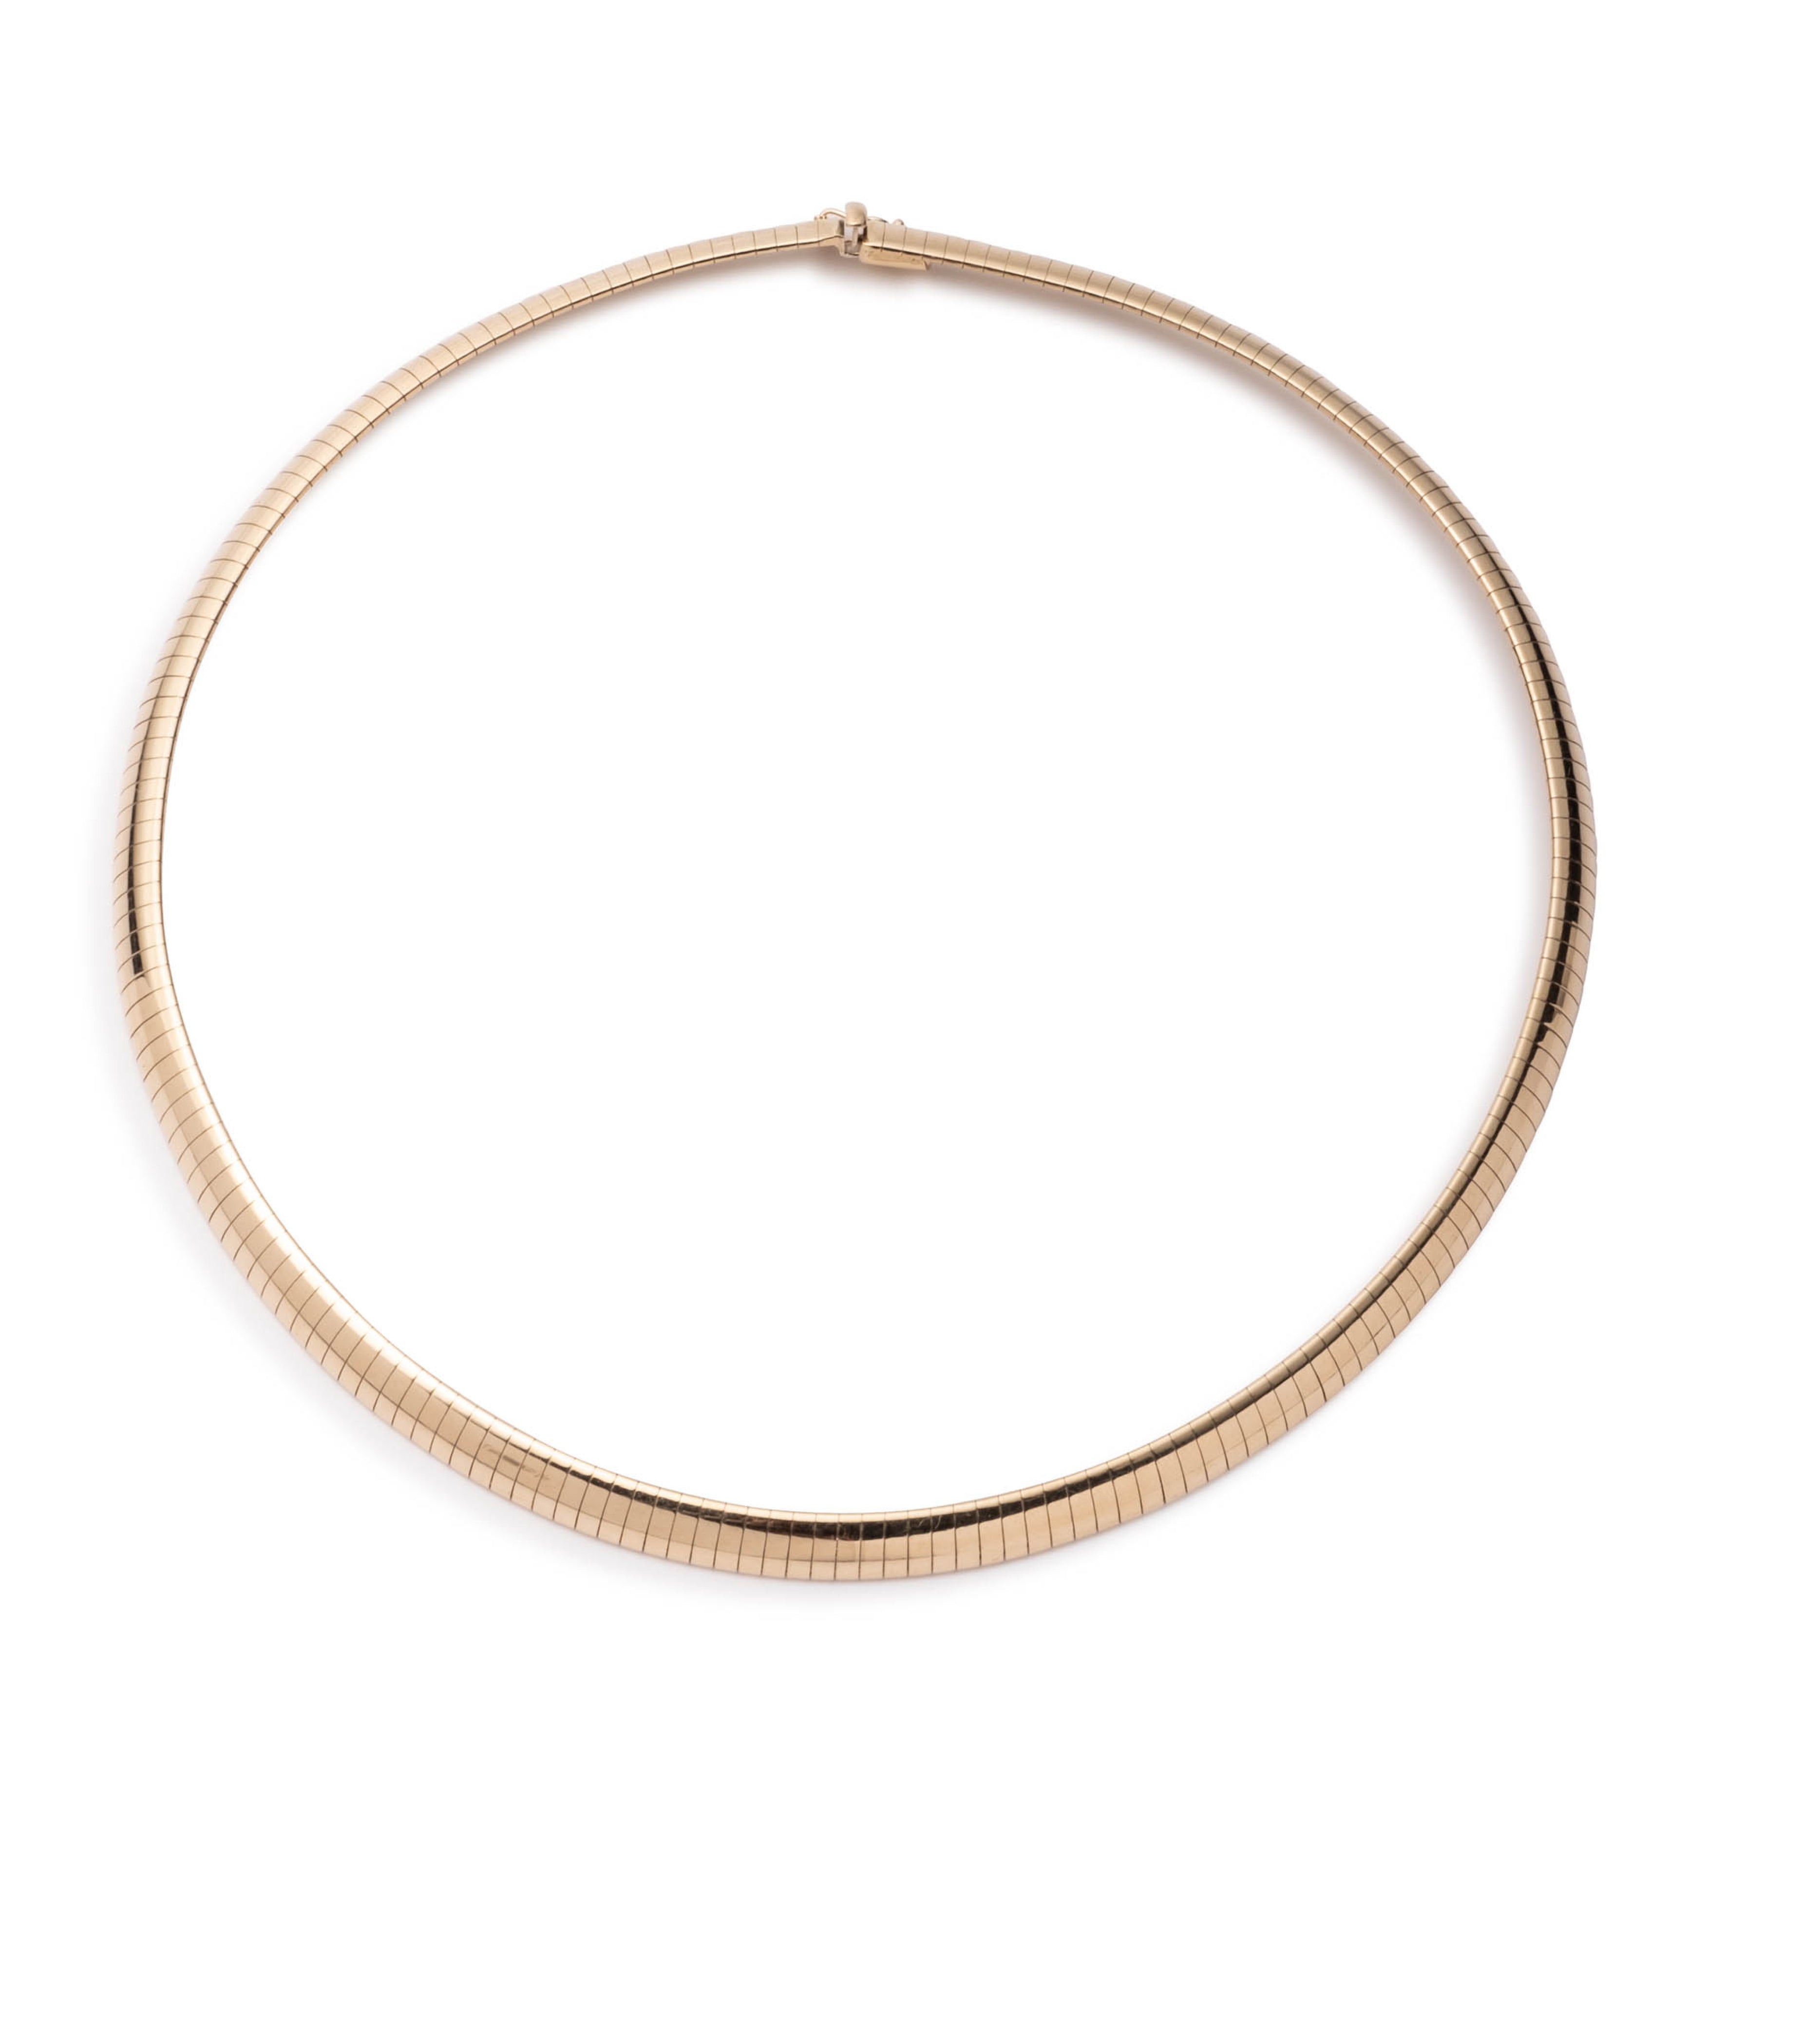 Medium Sleek Collar Chain Necklace